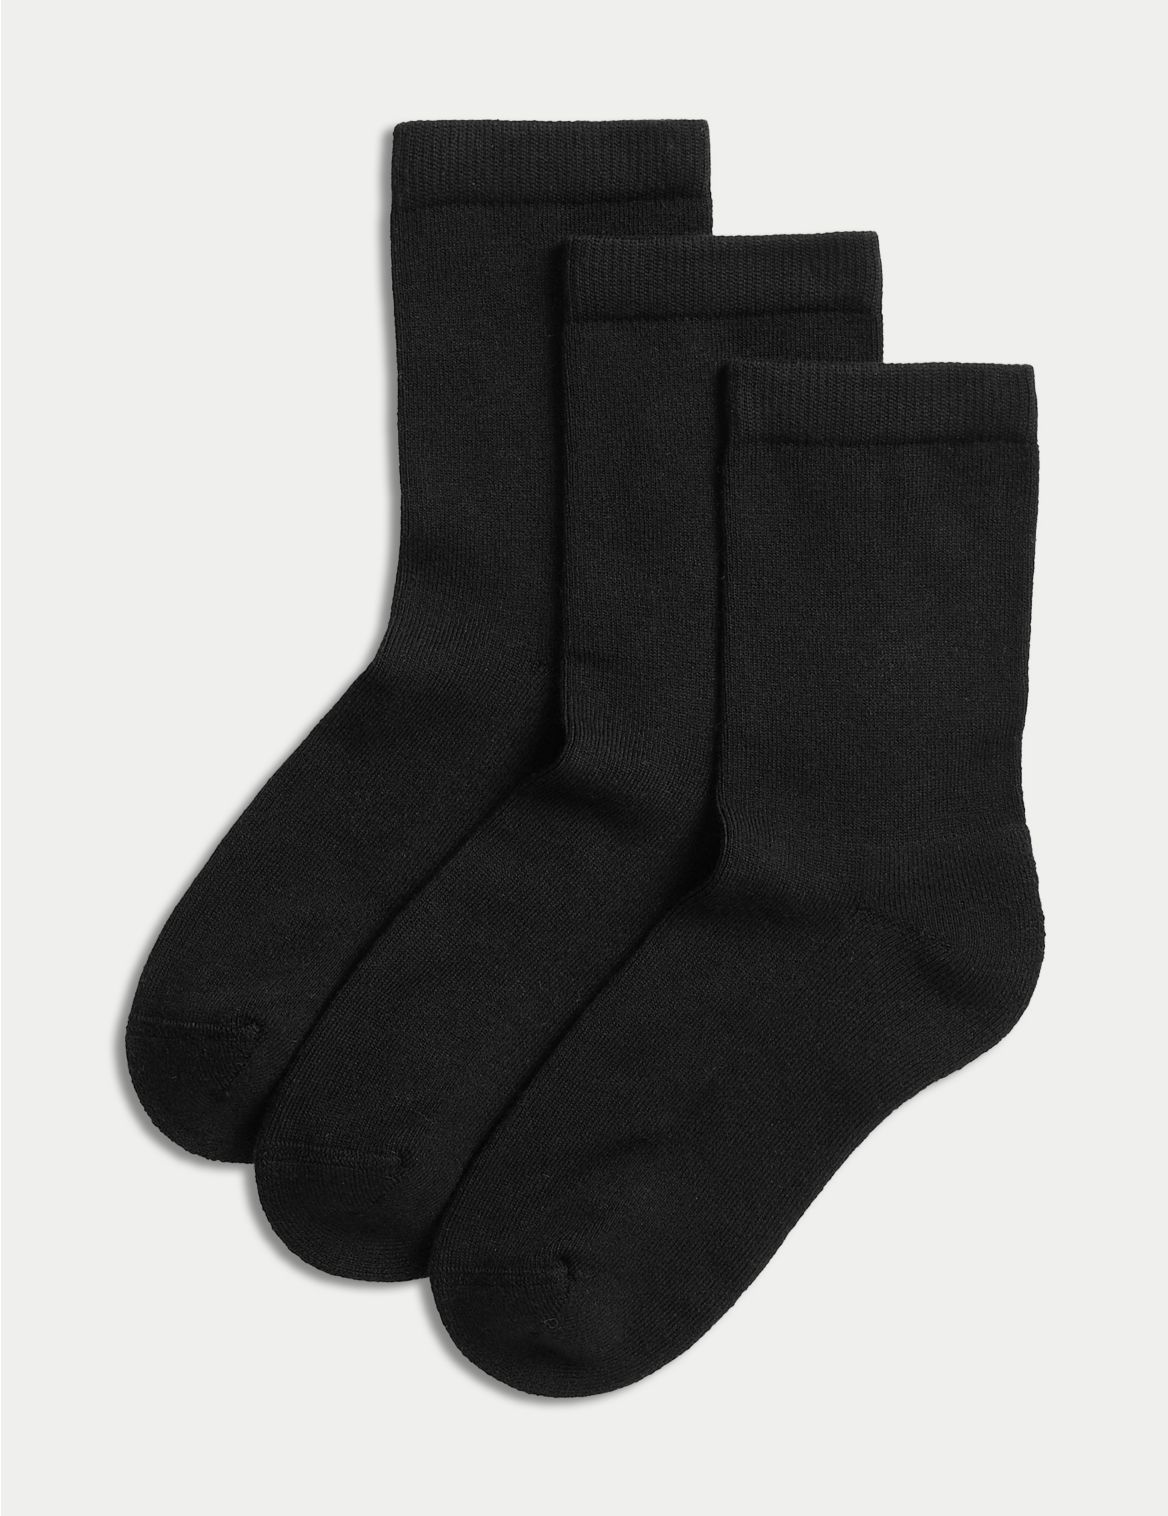 3pk of Ultimate Comfort Socks black